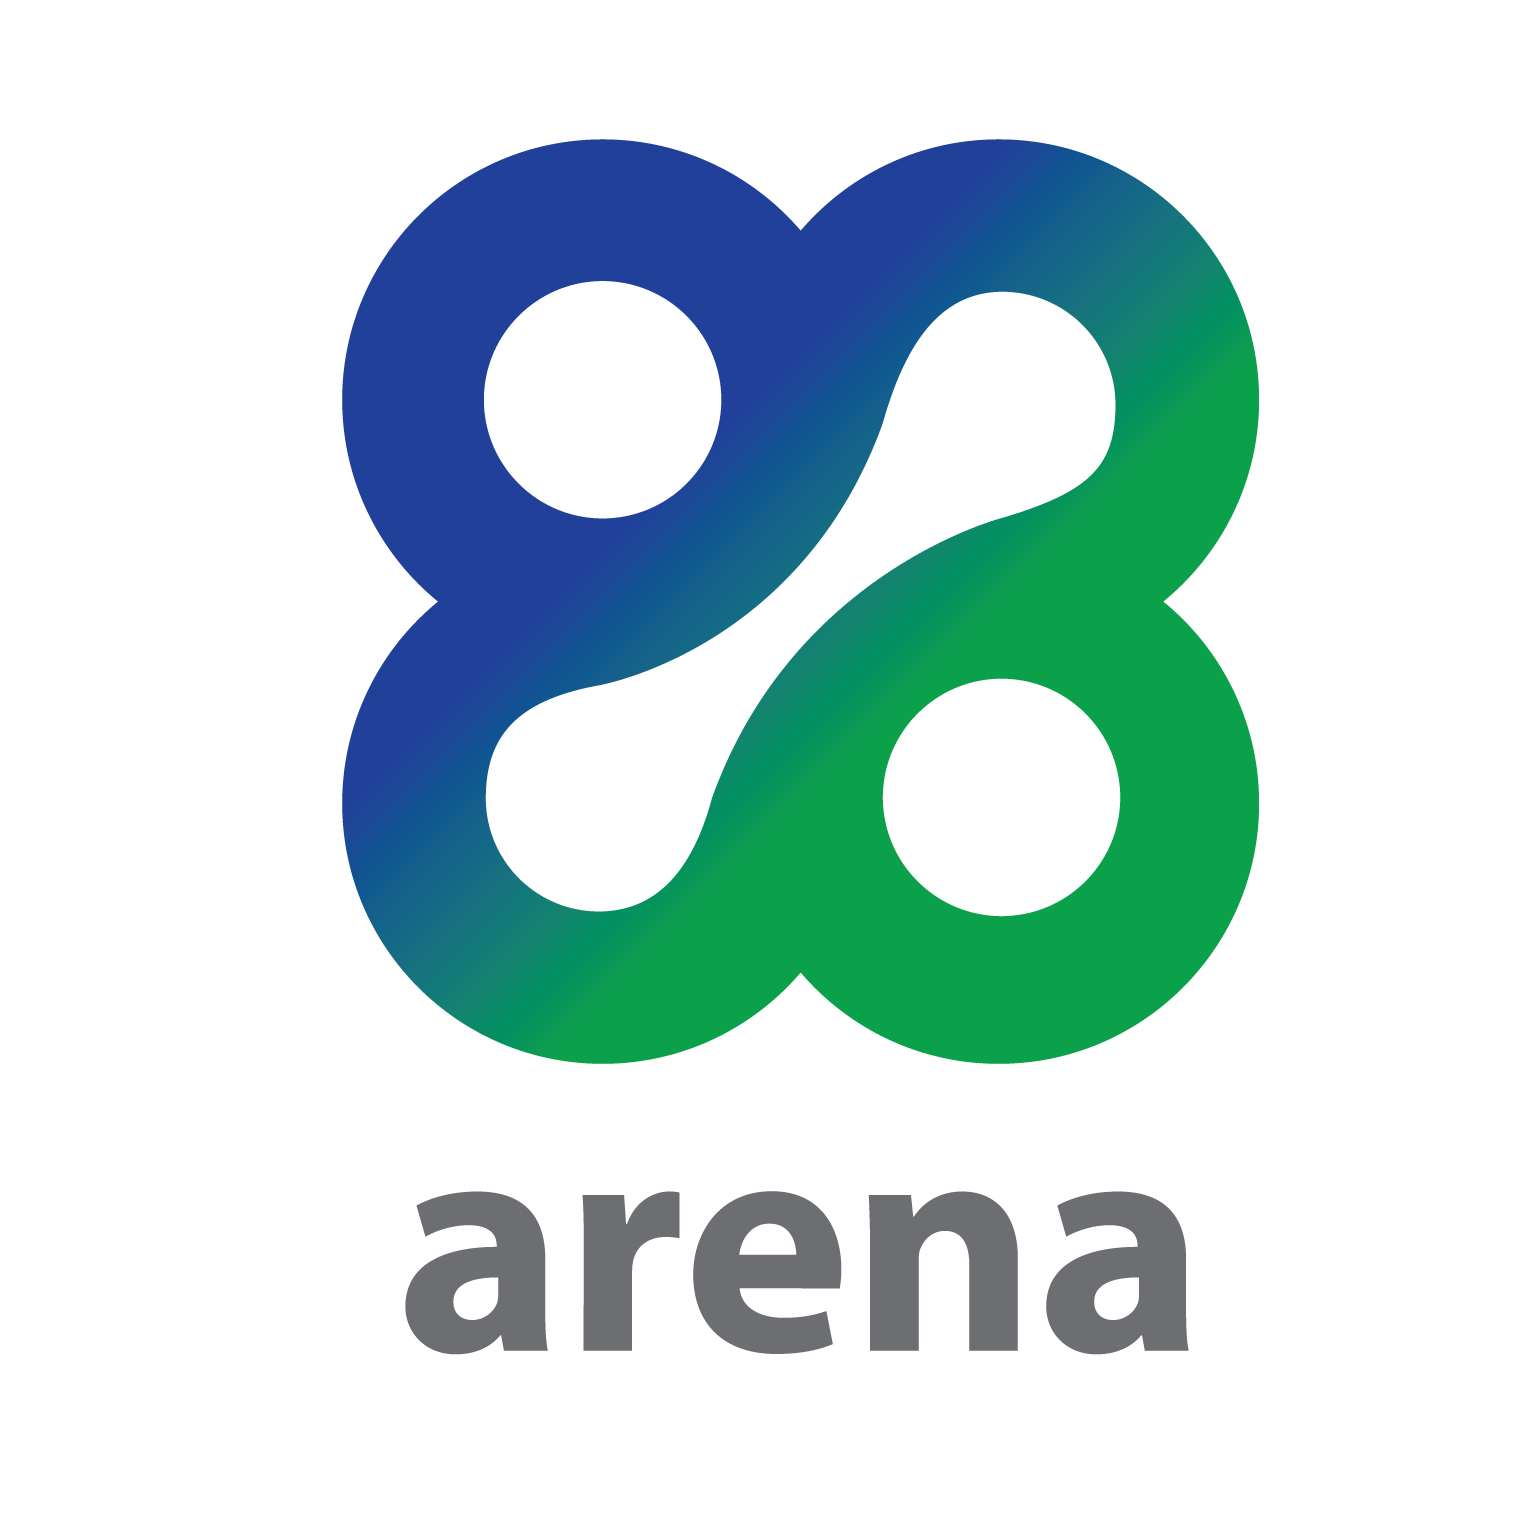 Arena Corporation